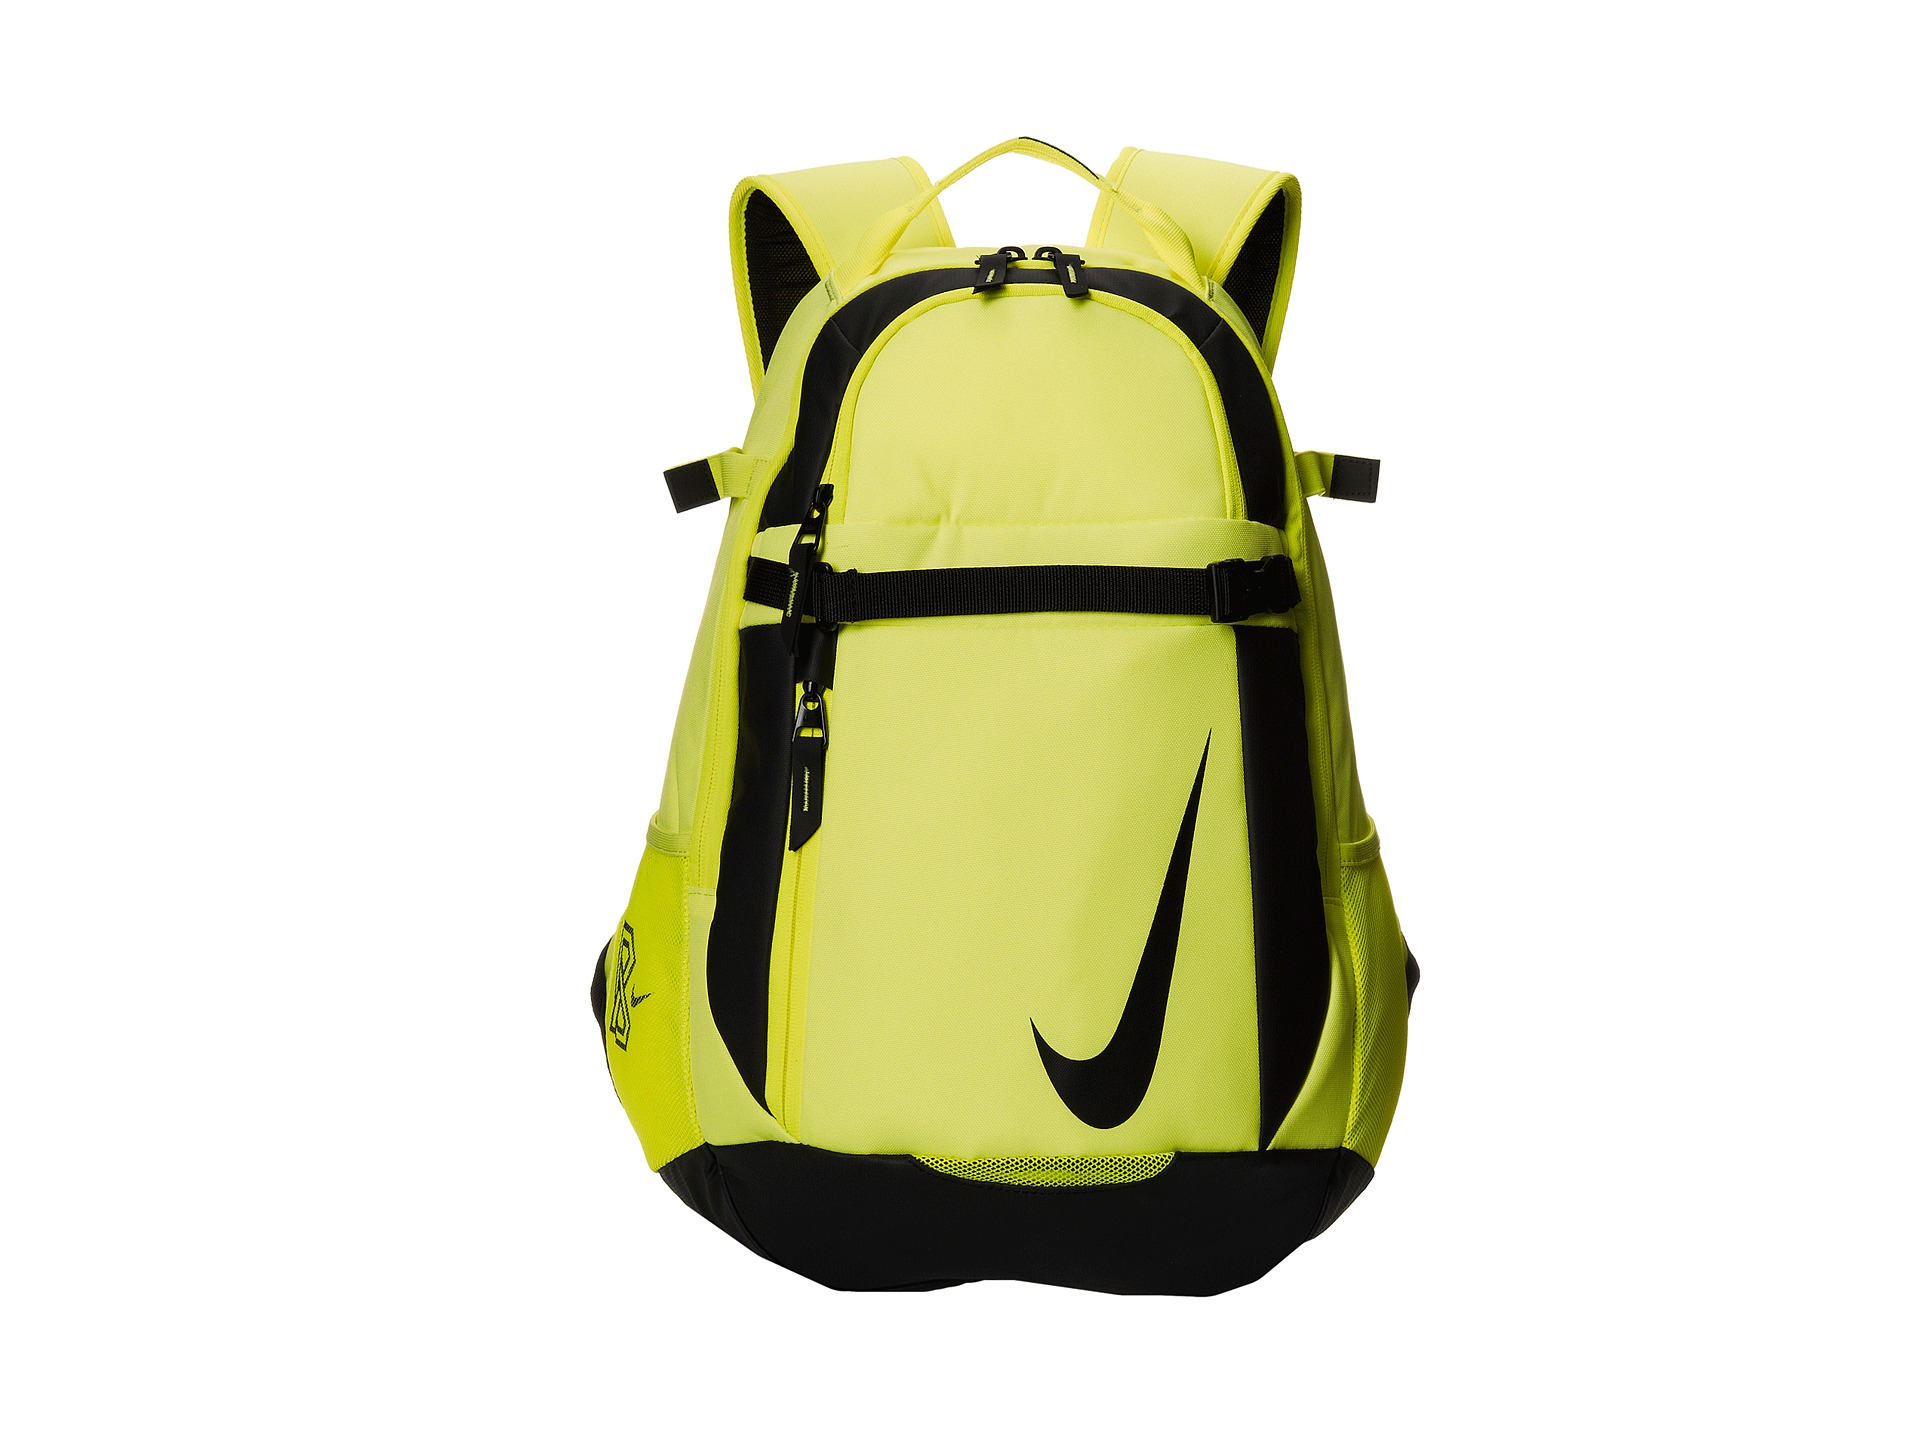 Nike Vapor Select Backpack